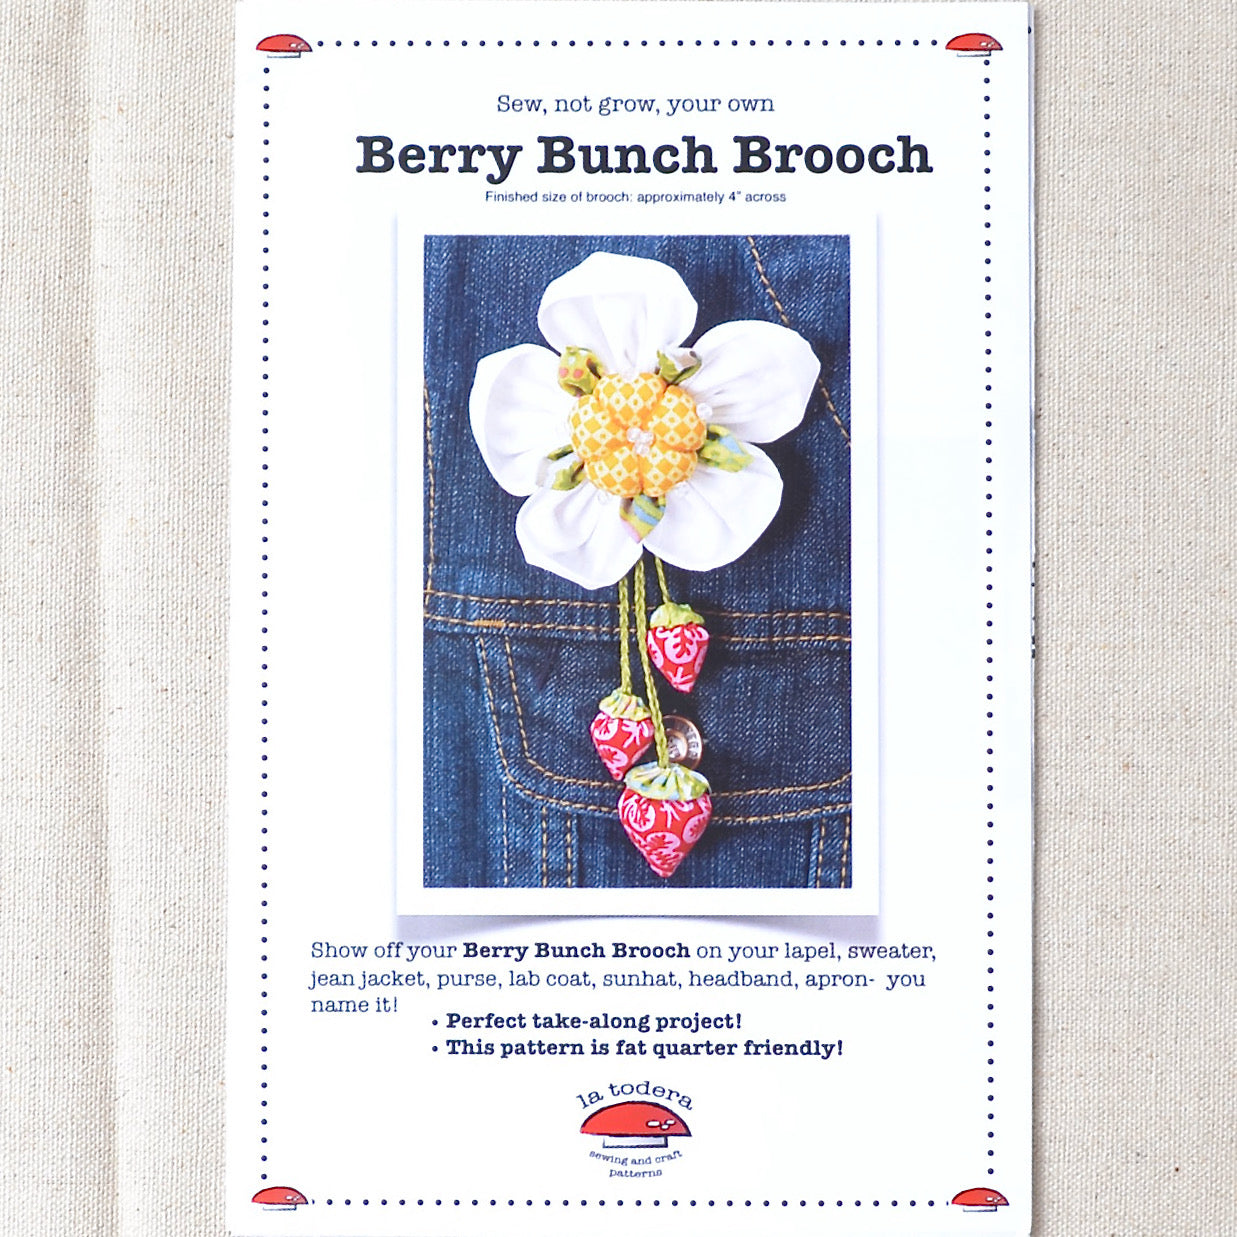 Berry Bunch Brooch